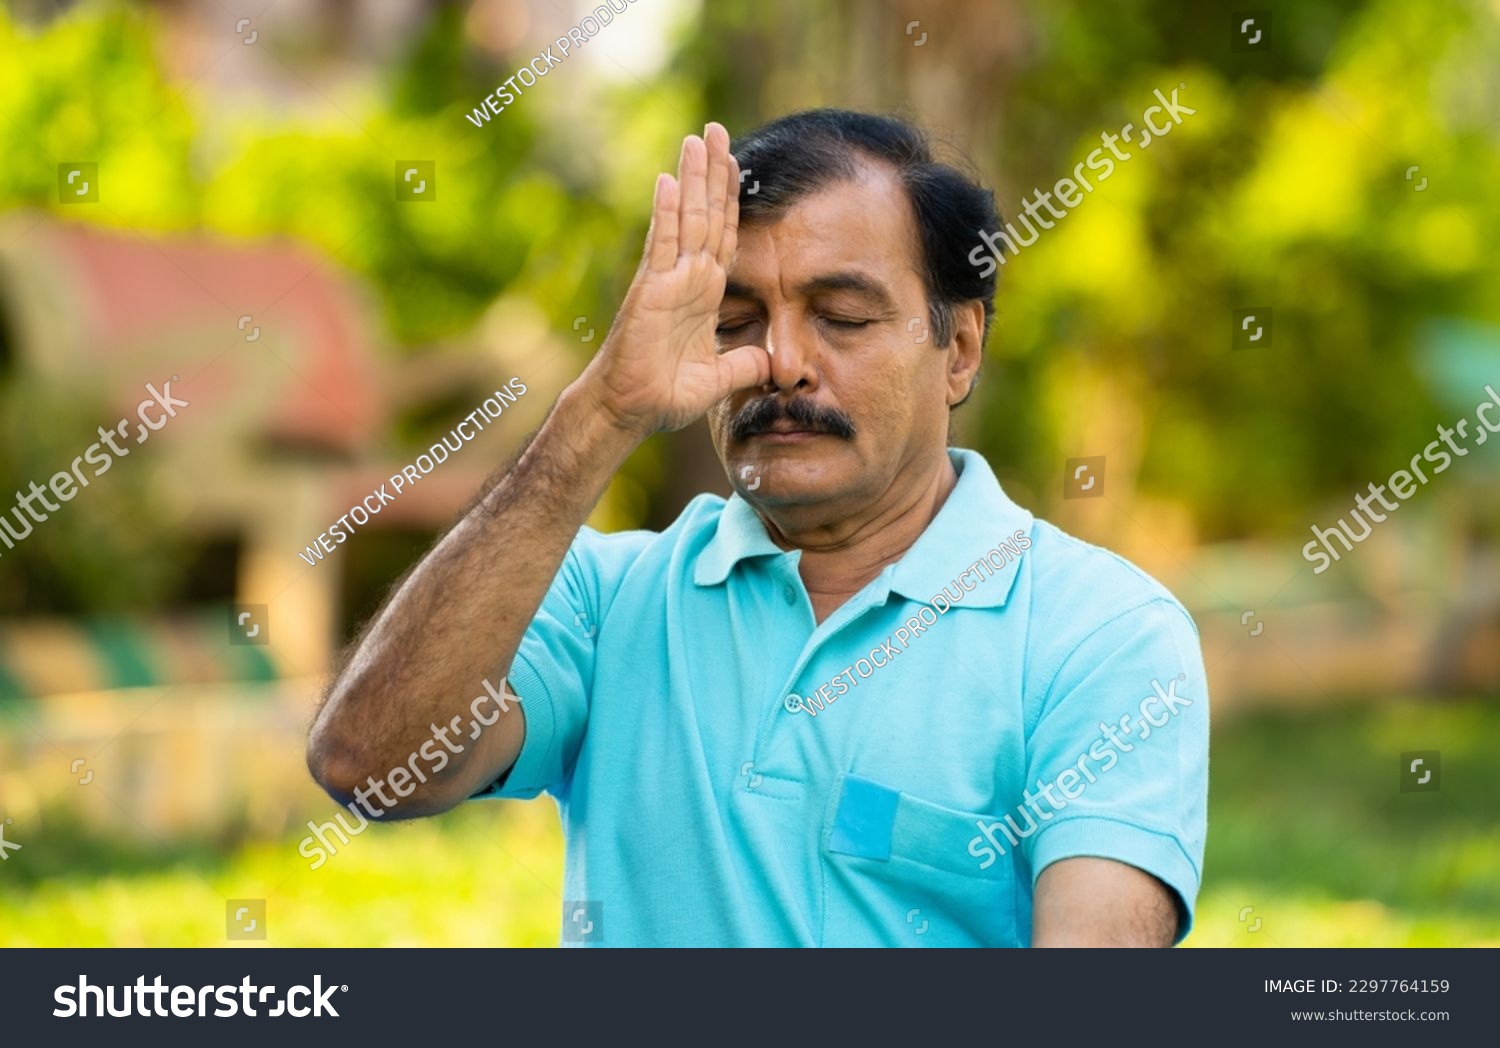 Elderly Indian senior man doing nostril breathing yoga or pranayama exercise - concept of zen, healthy lifestyle and mental wellness #2297764159